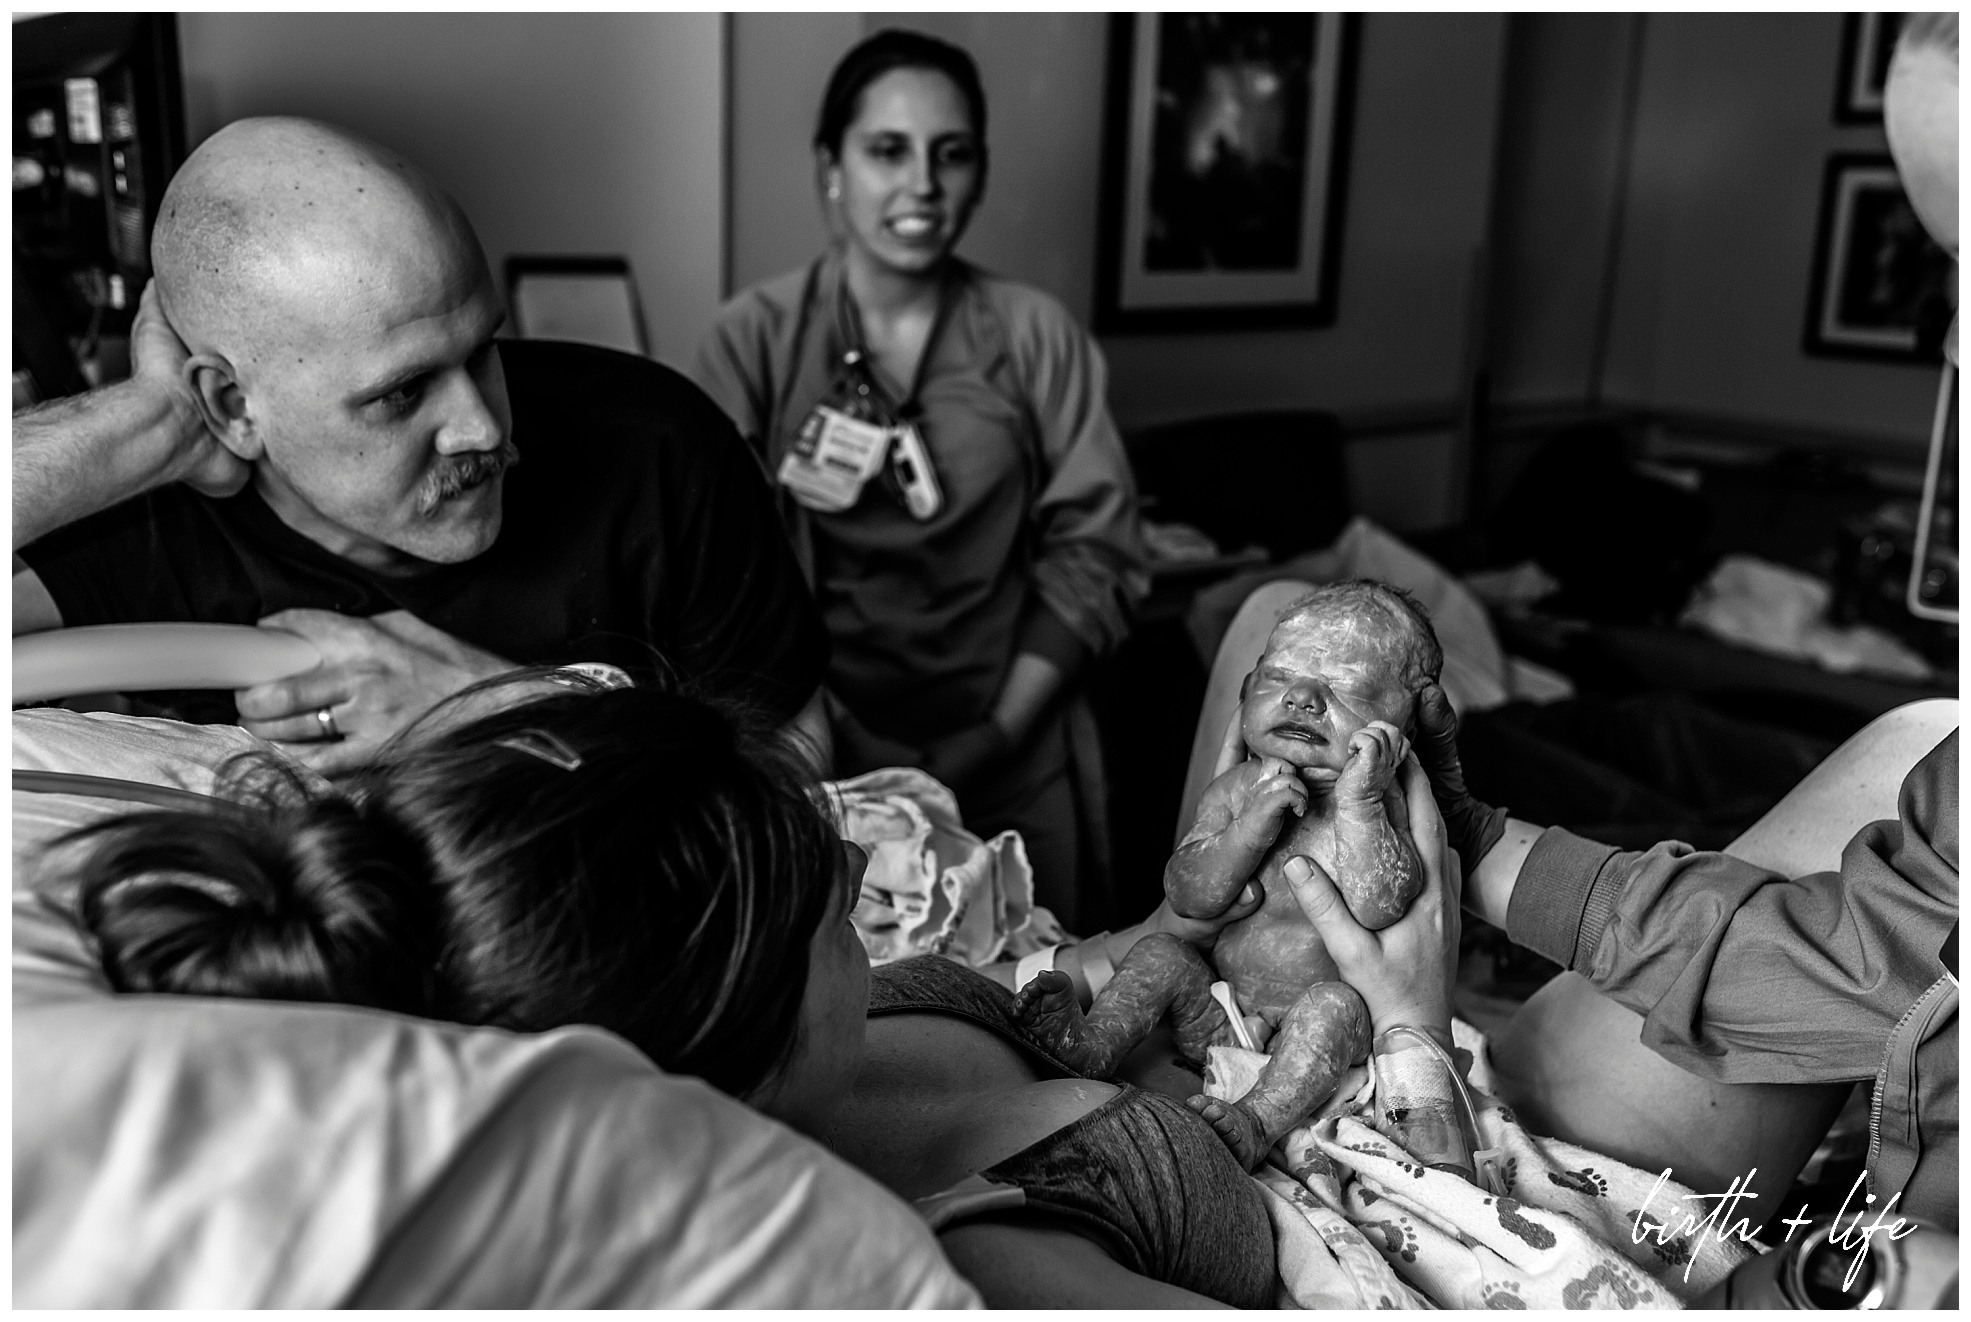 dfw-birth-and-life-photography-family-photojournalism-documentary-birth-storyacclaim-midwives-clark036.jpg